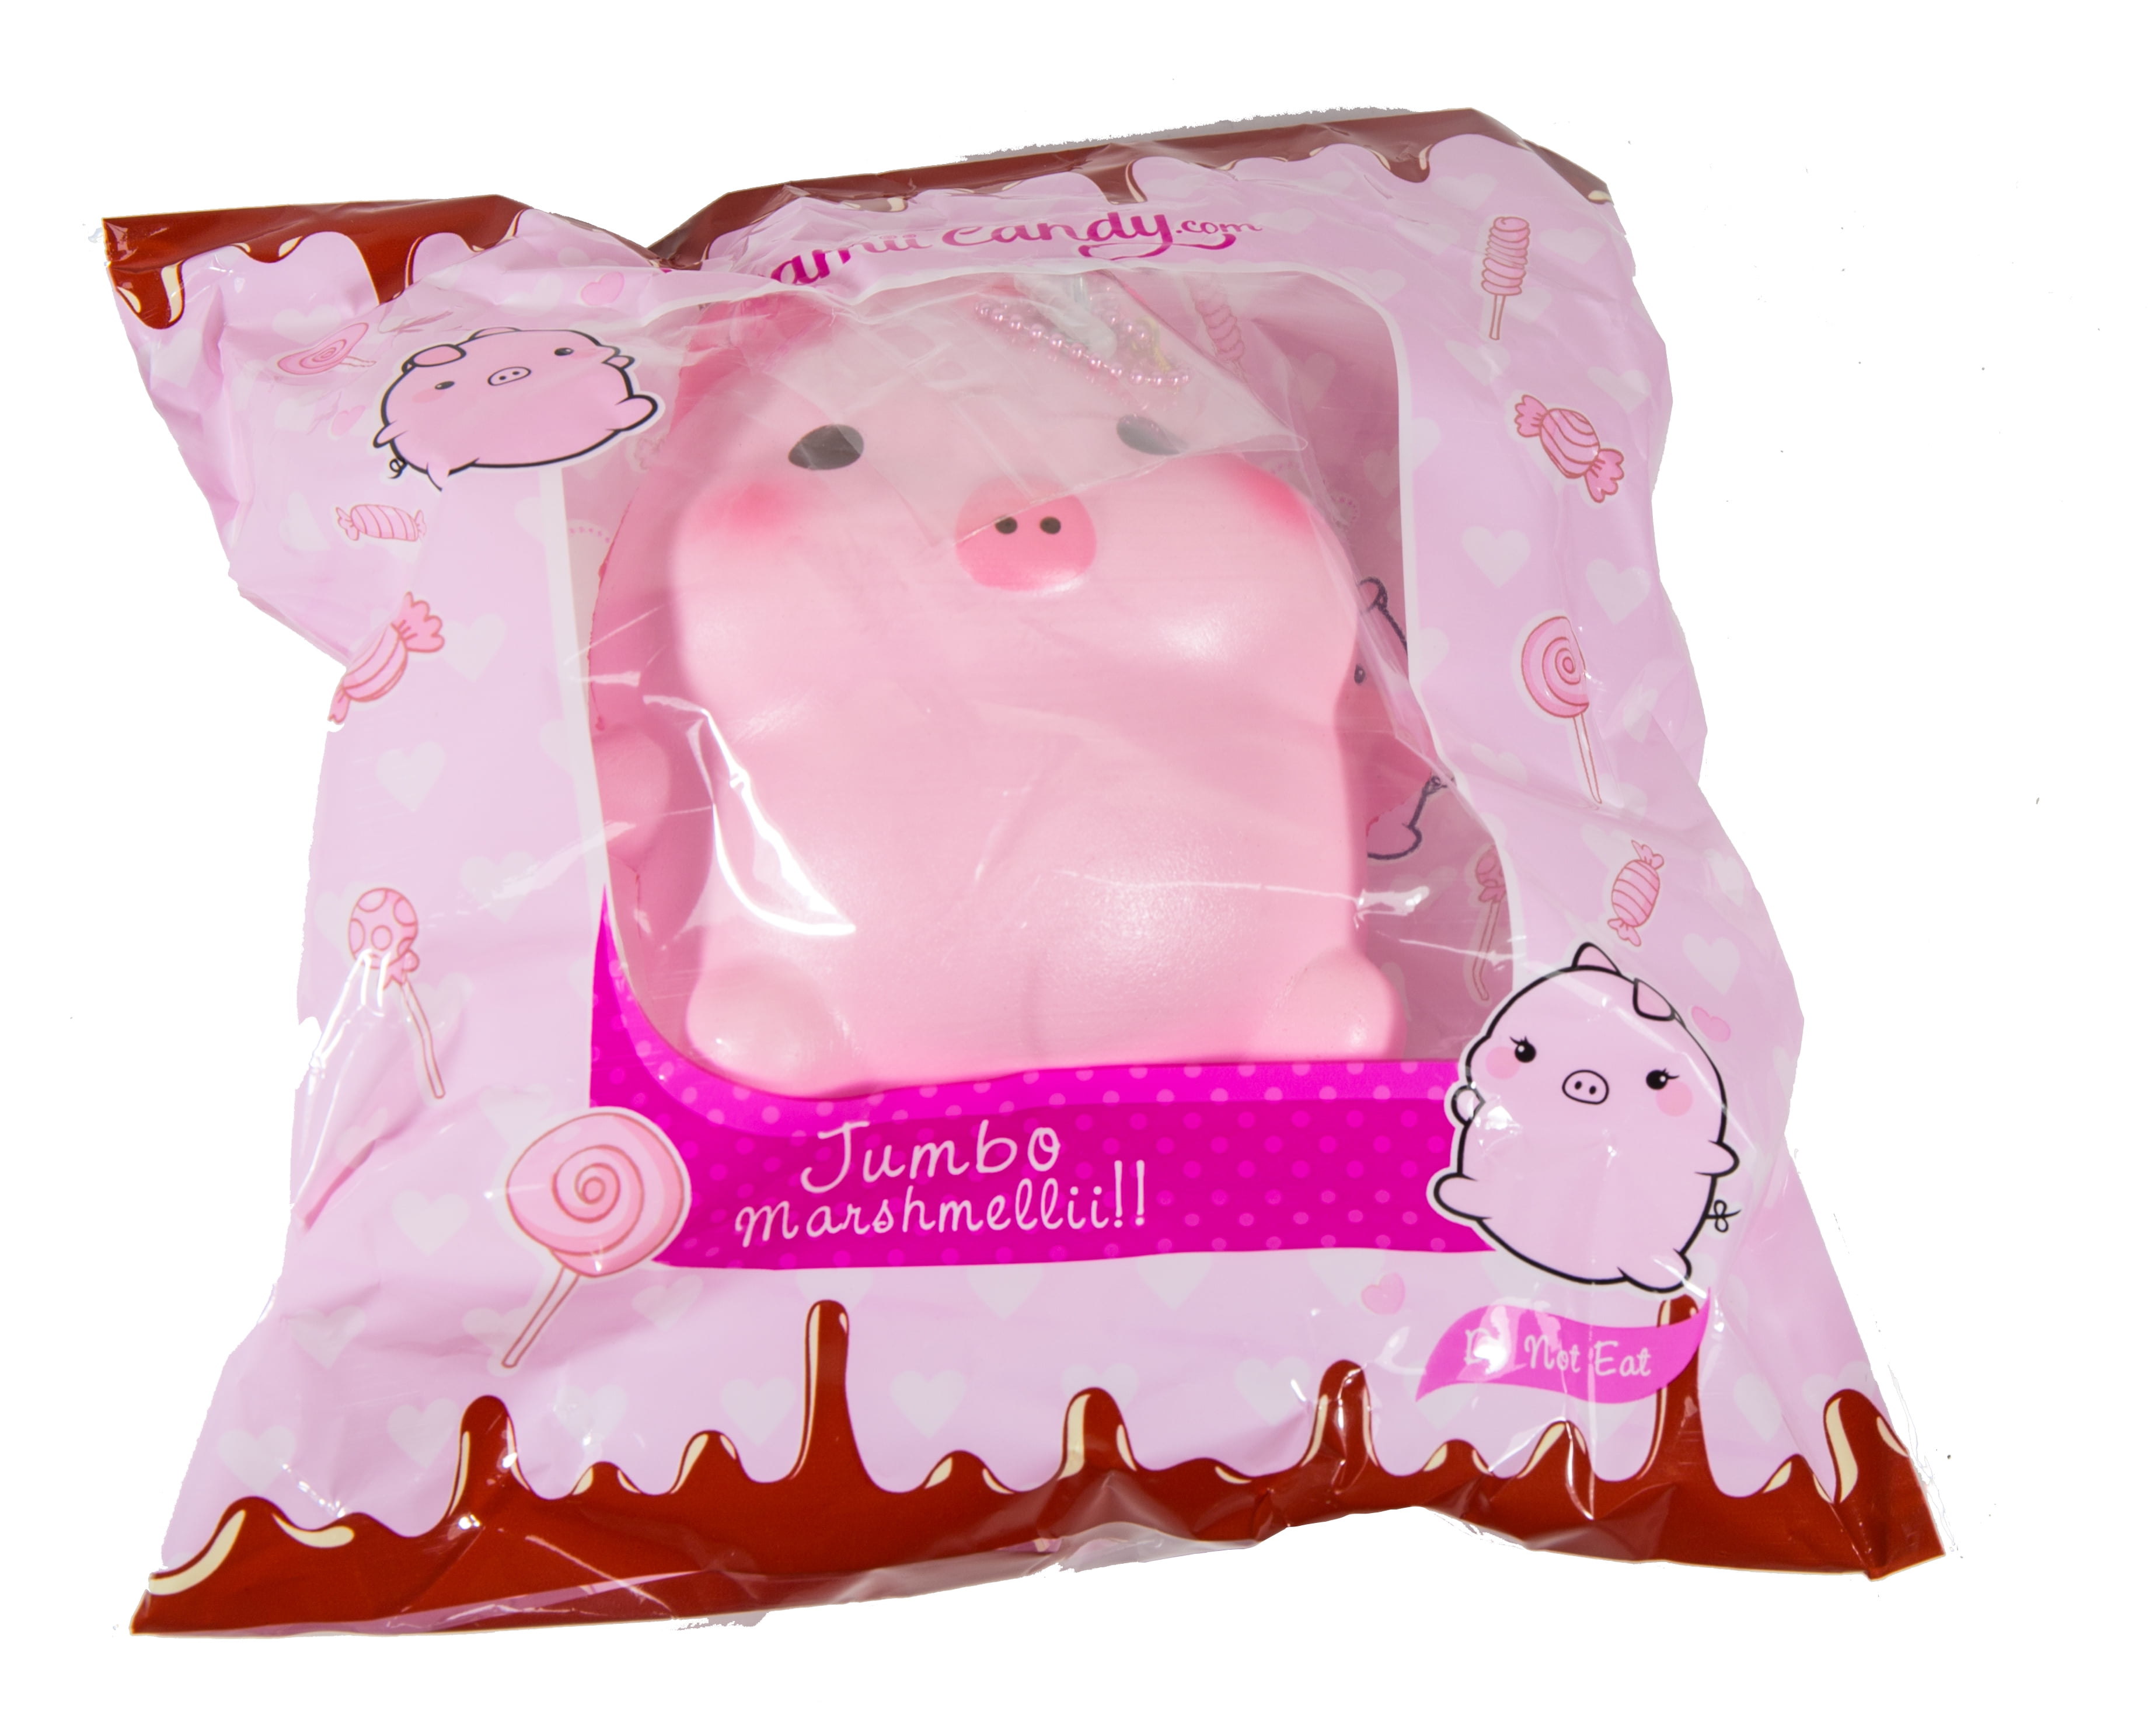 jumbo marshmallow pig squishy